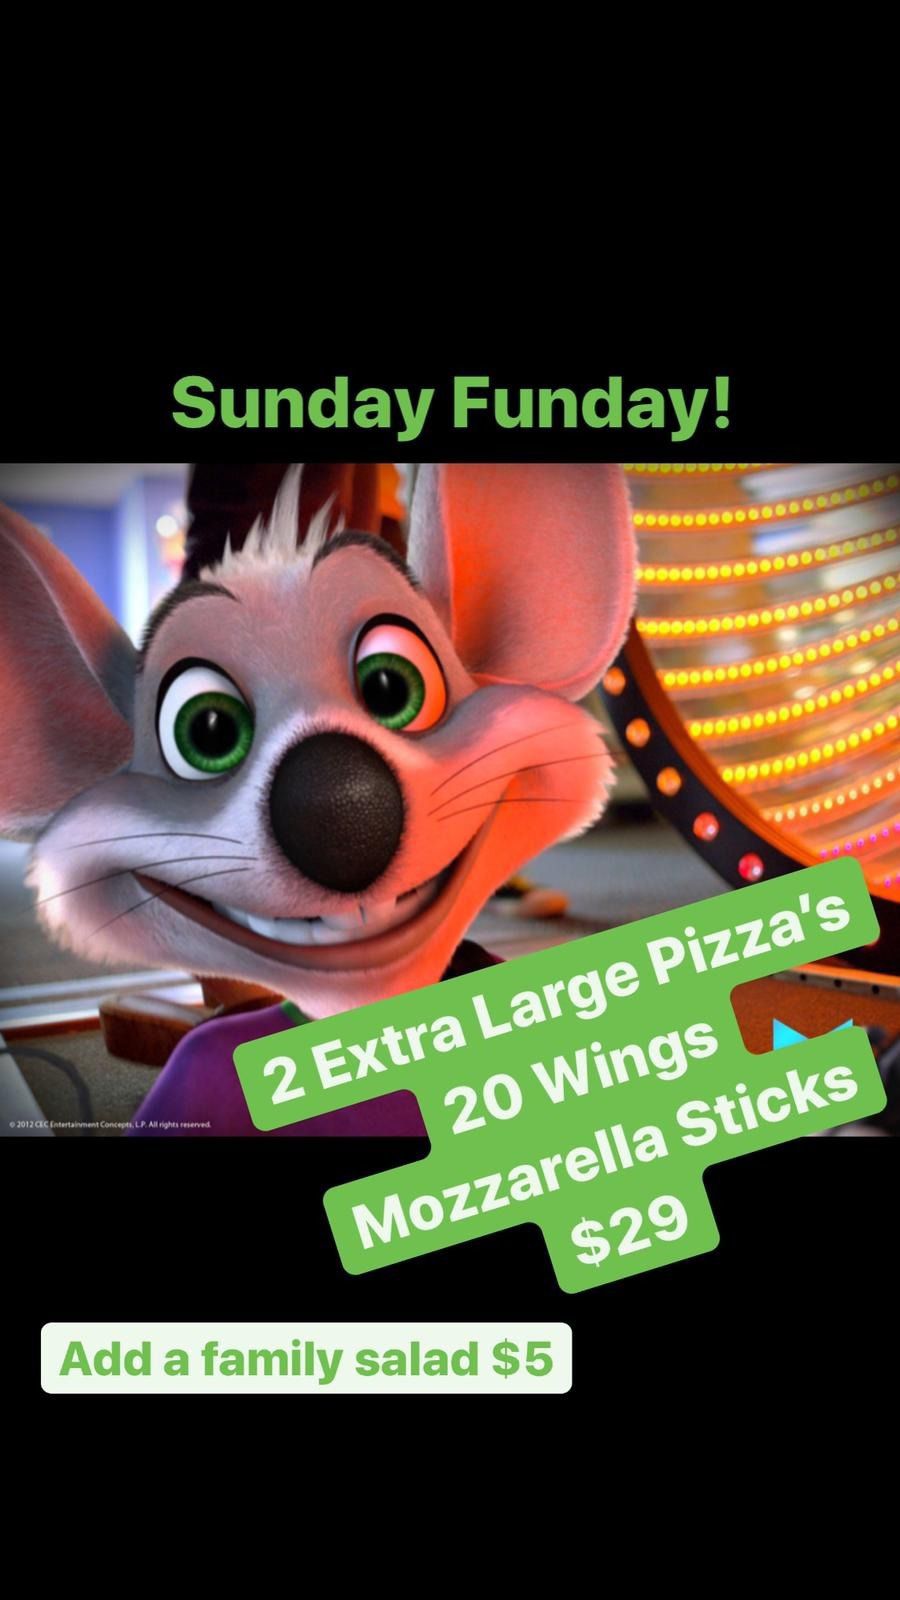 Chuck E Cheese in Vista Ca Sunday Fun Day Deal